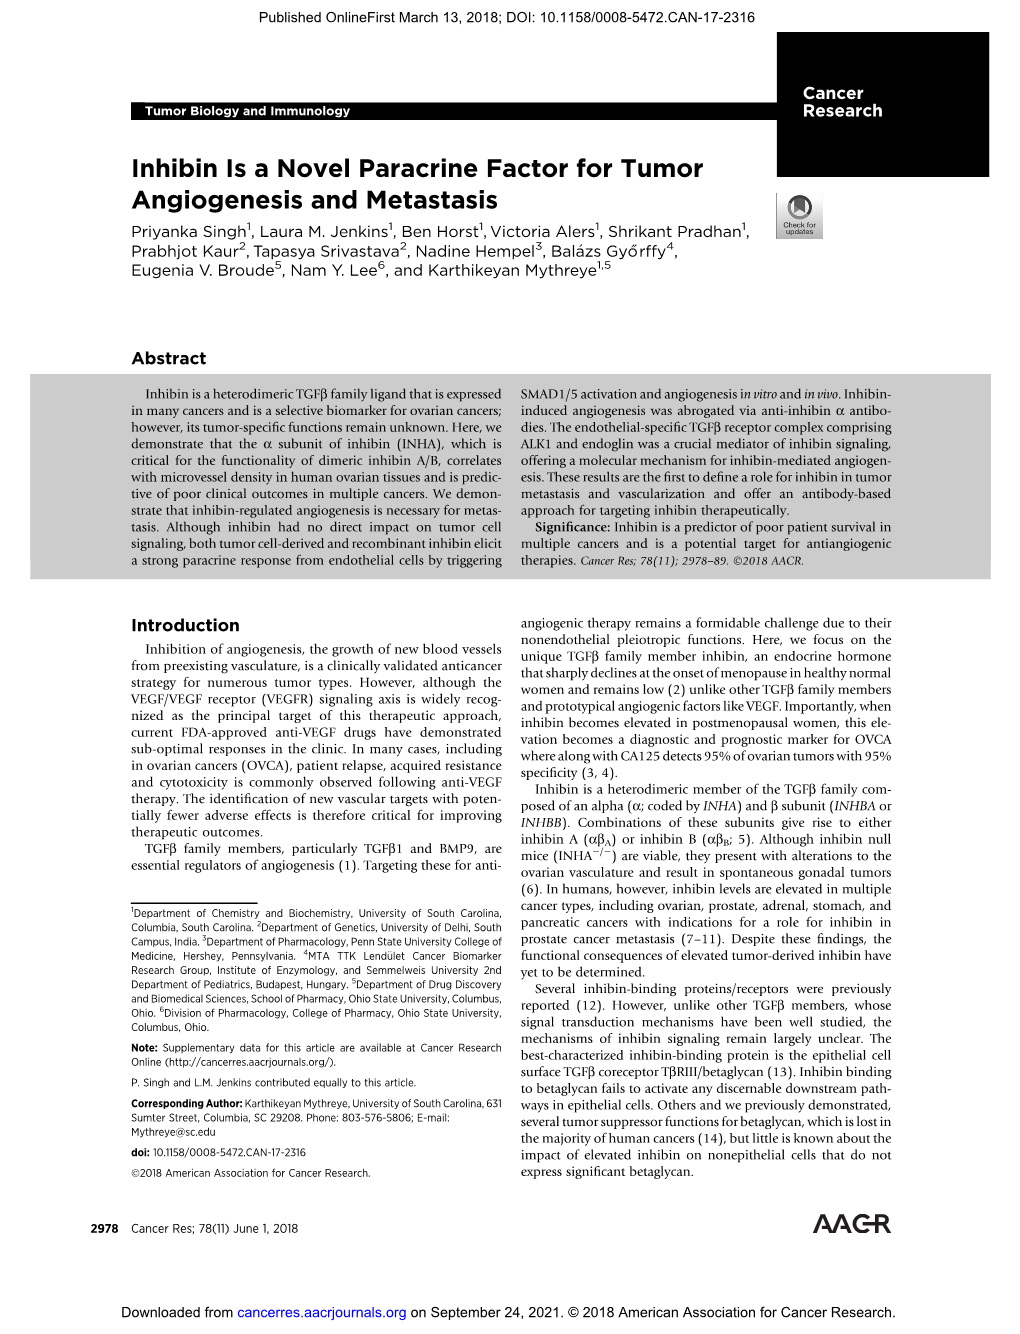 Inhibin Is a Novel Paracrine Factor for Tumor Angiogenesis and Metastasis Priyanka Singh1, Laura M